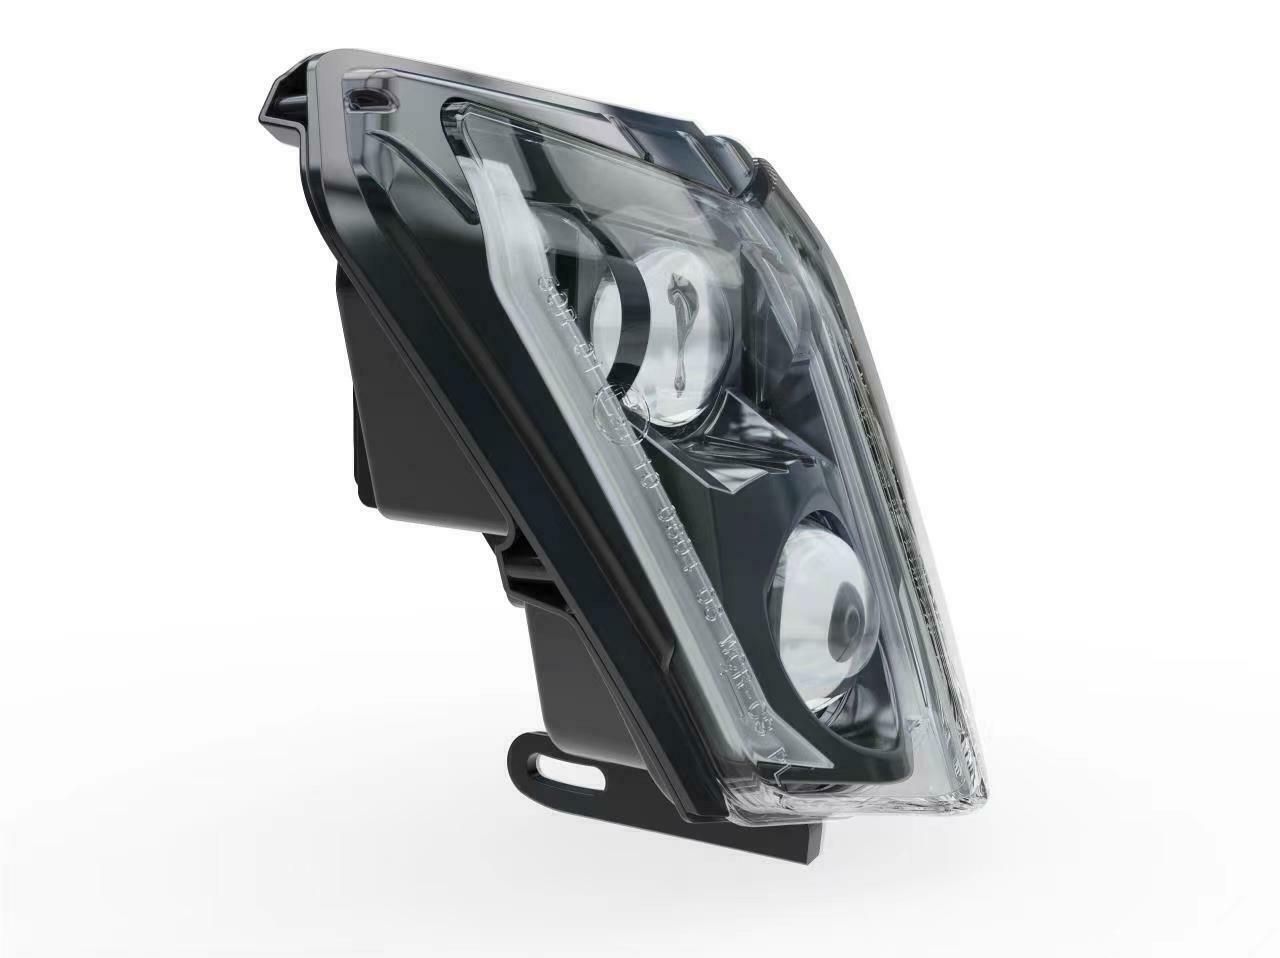 LED Headlight H/L Beam w/Turn Signal For KTM 250 350 450 500 690 Enduro R  SMC-R